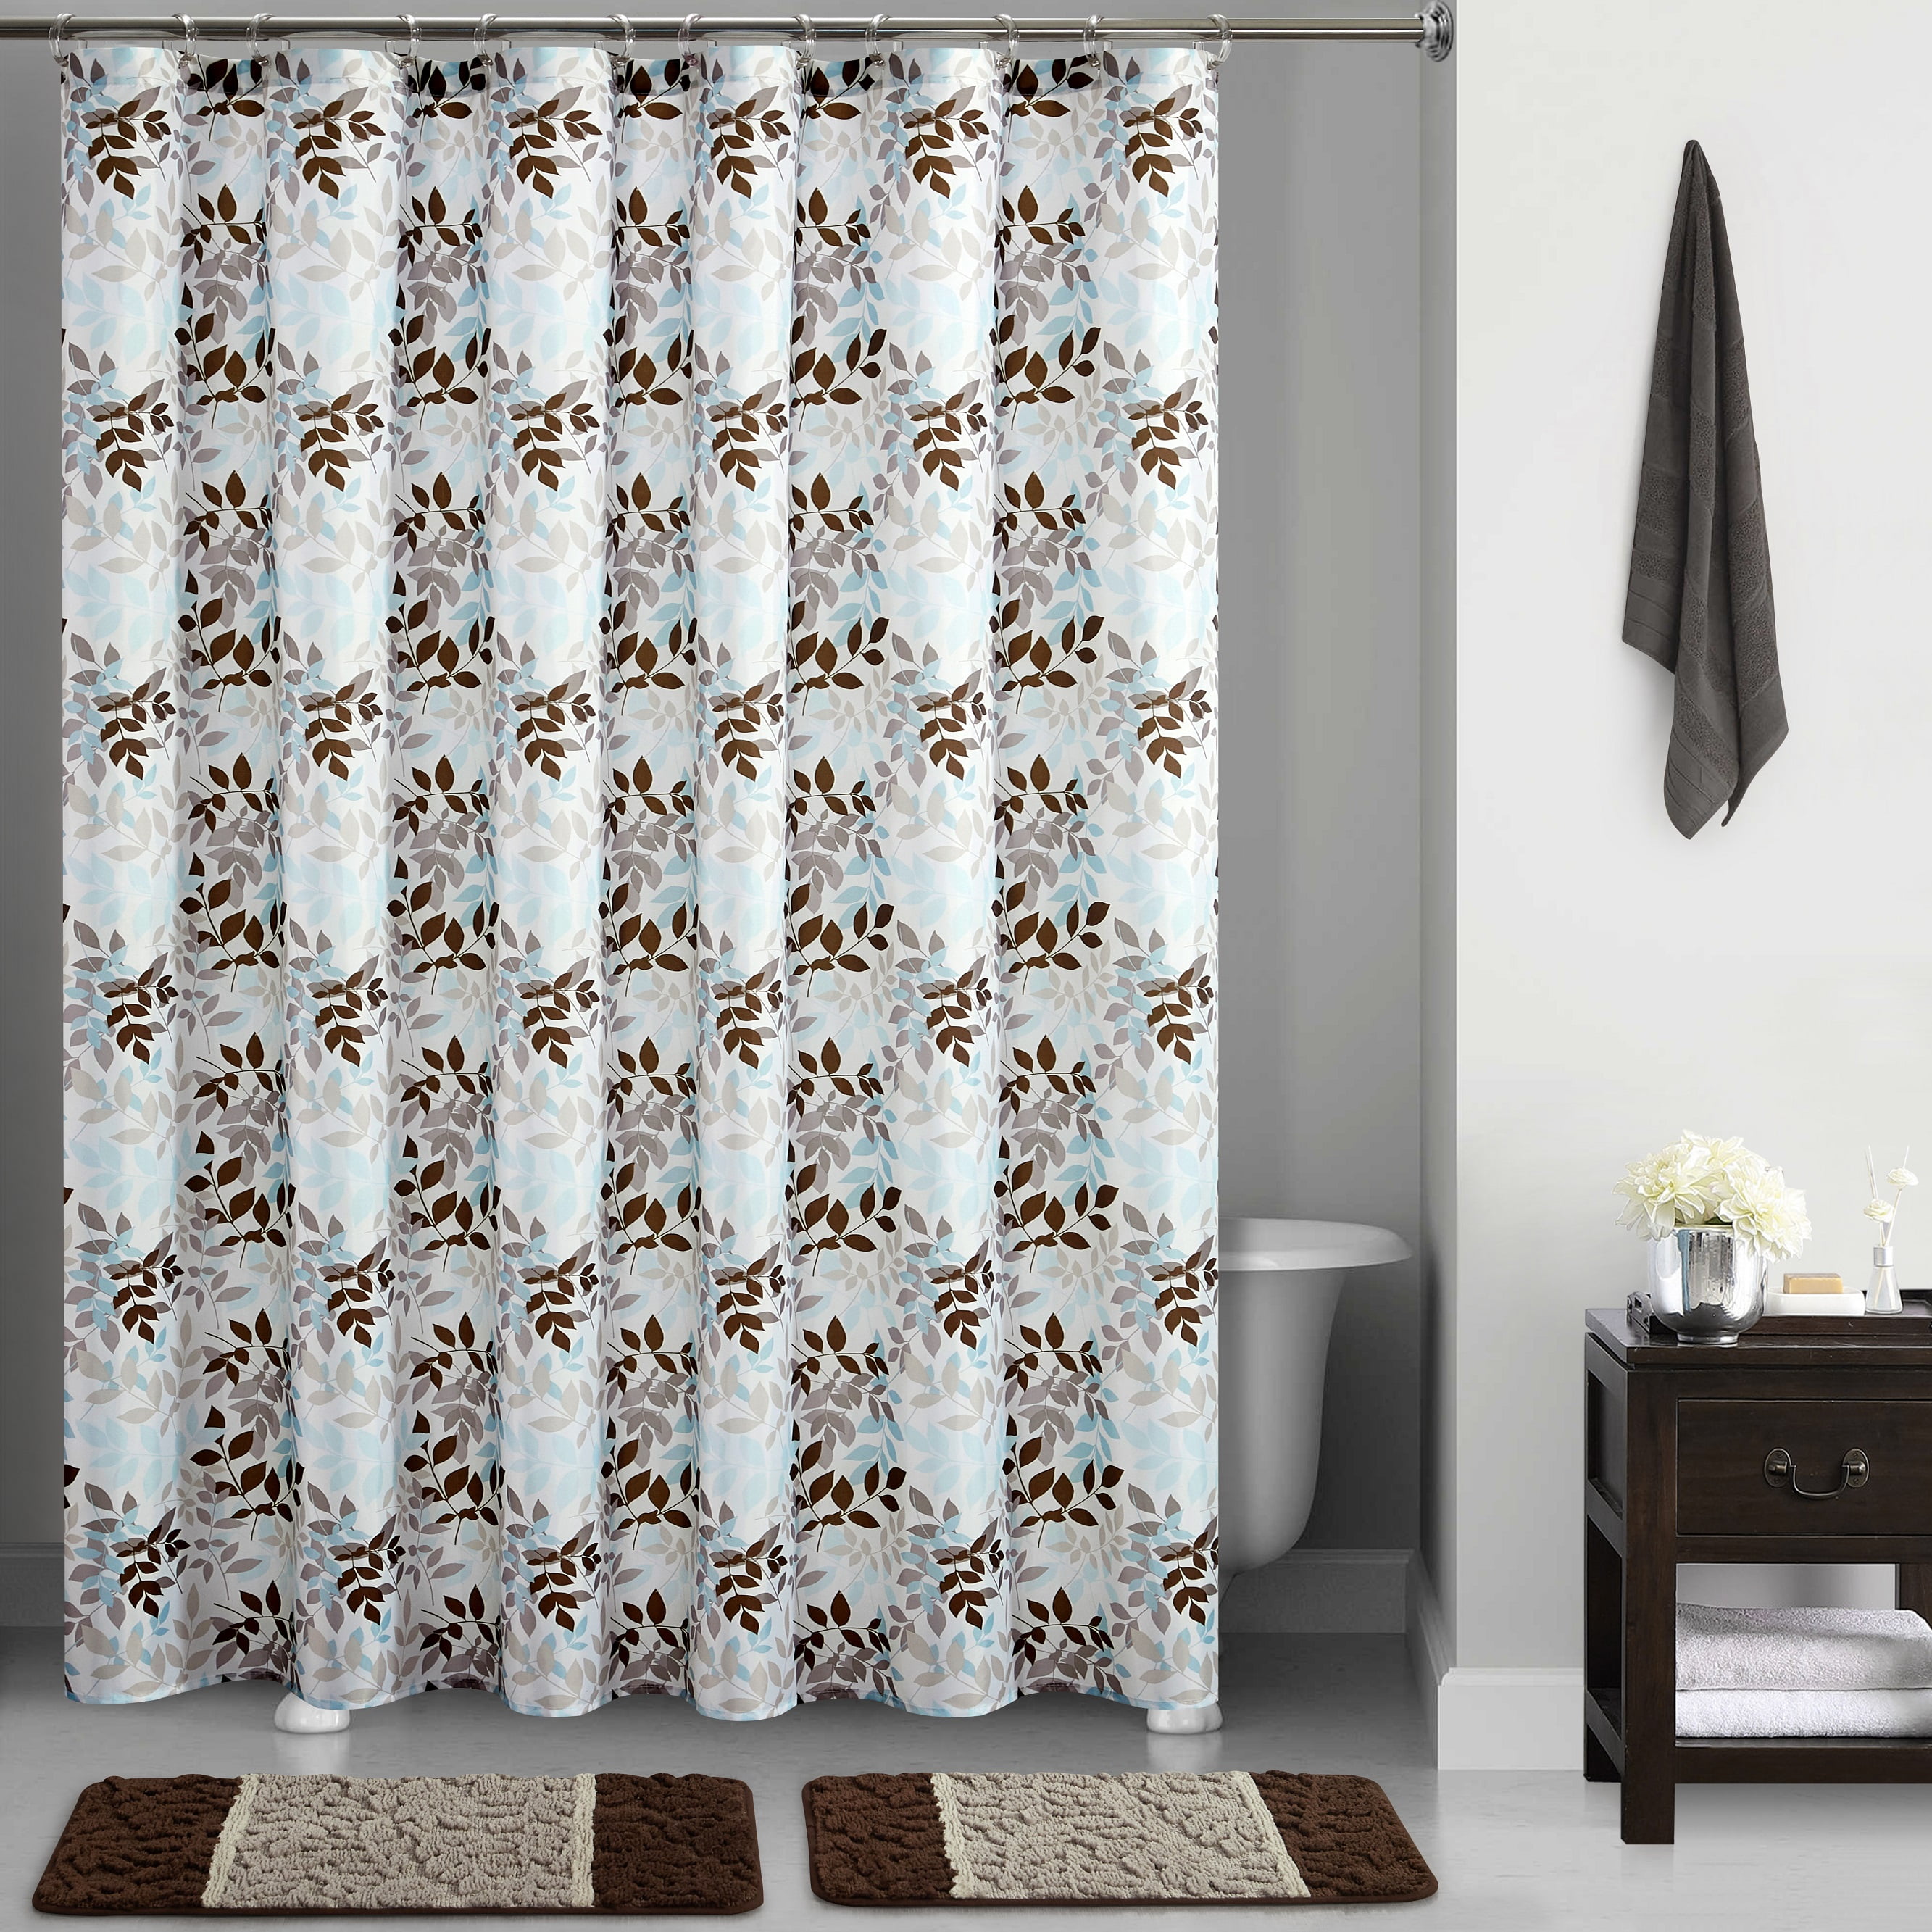 Details about   Mainstays Blue Postal Printed 15 Piece Shower Curtain Set 